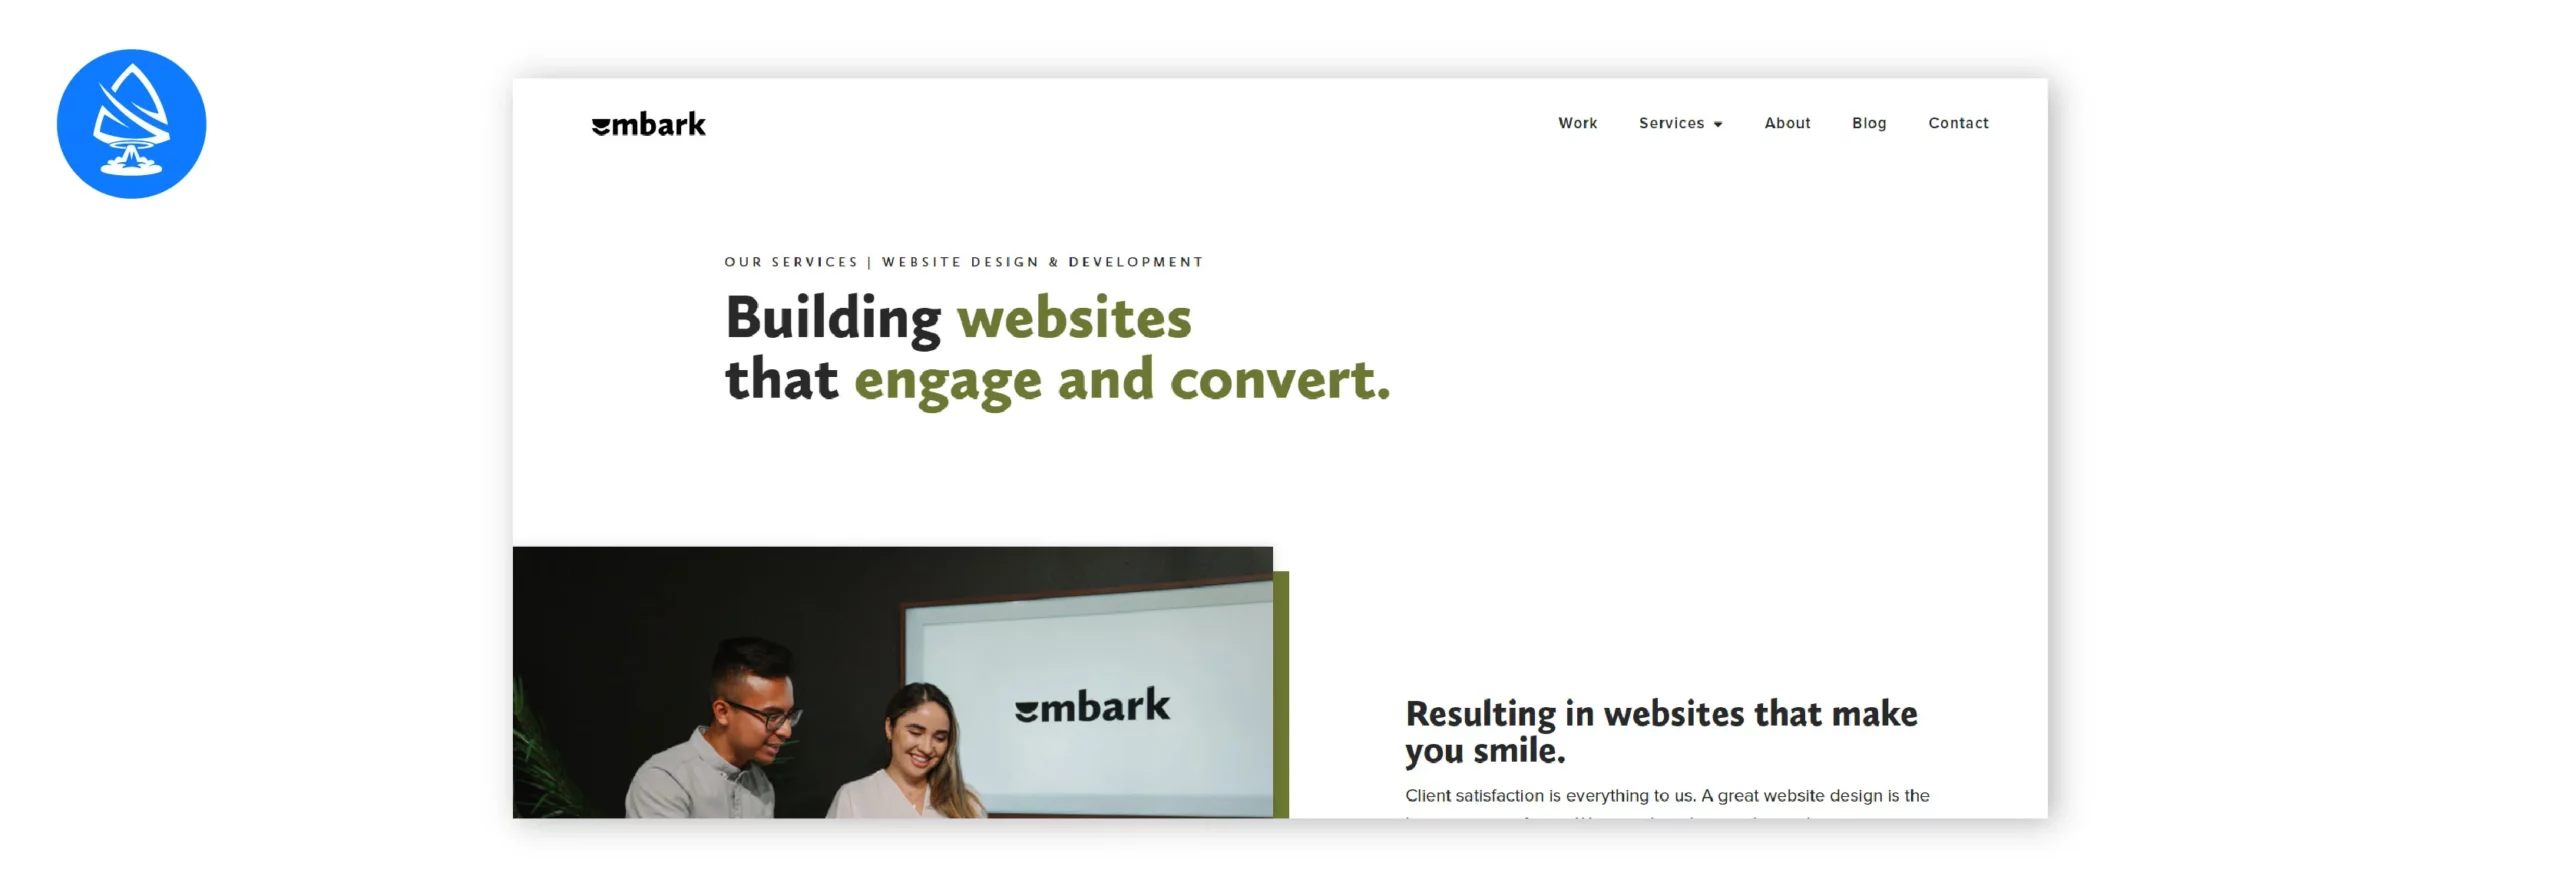 Embark - Providing WordPress Web Design Services